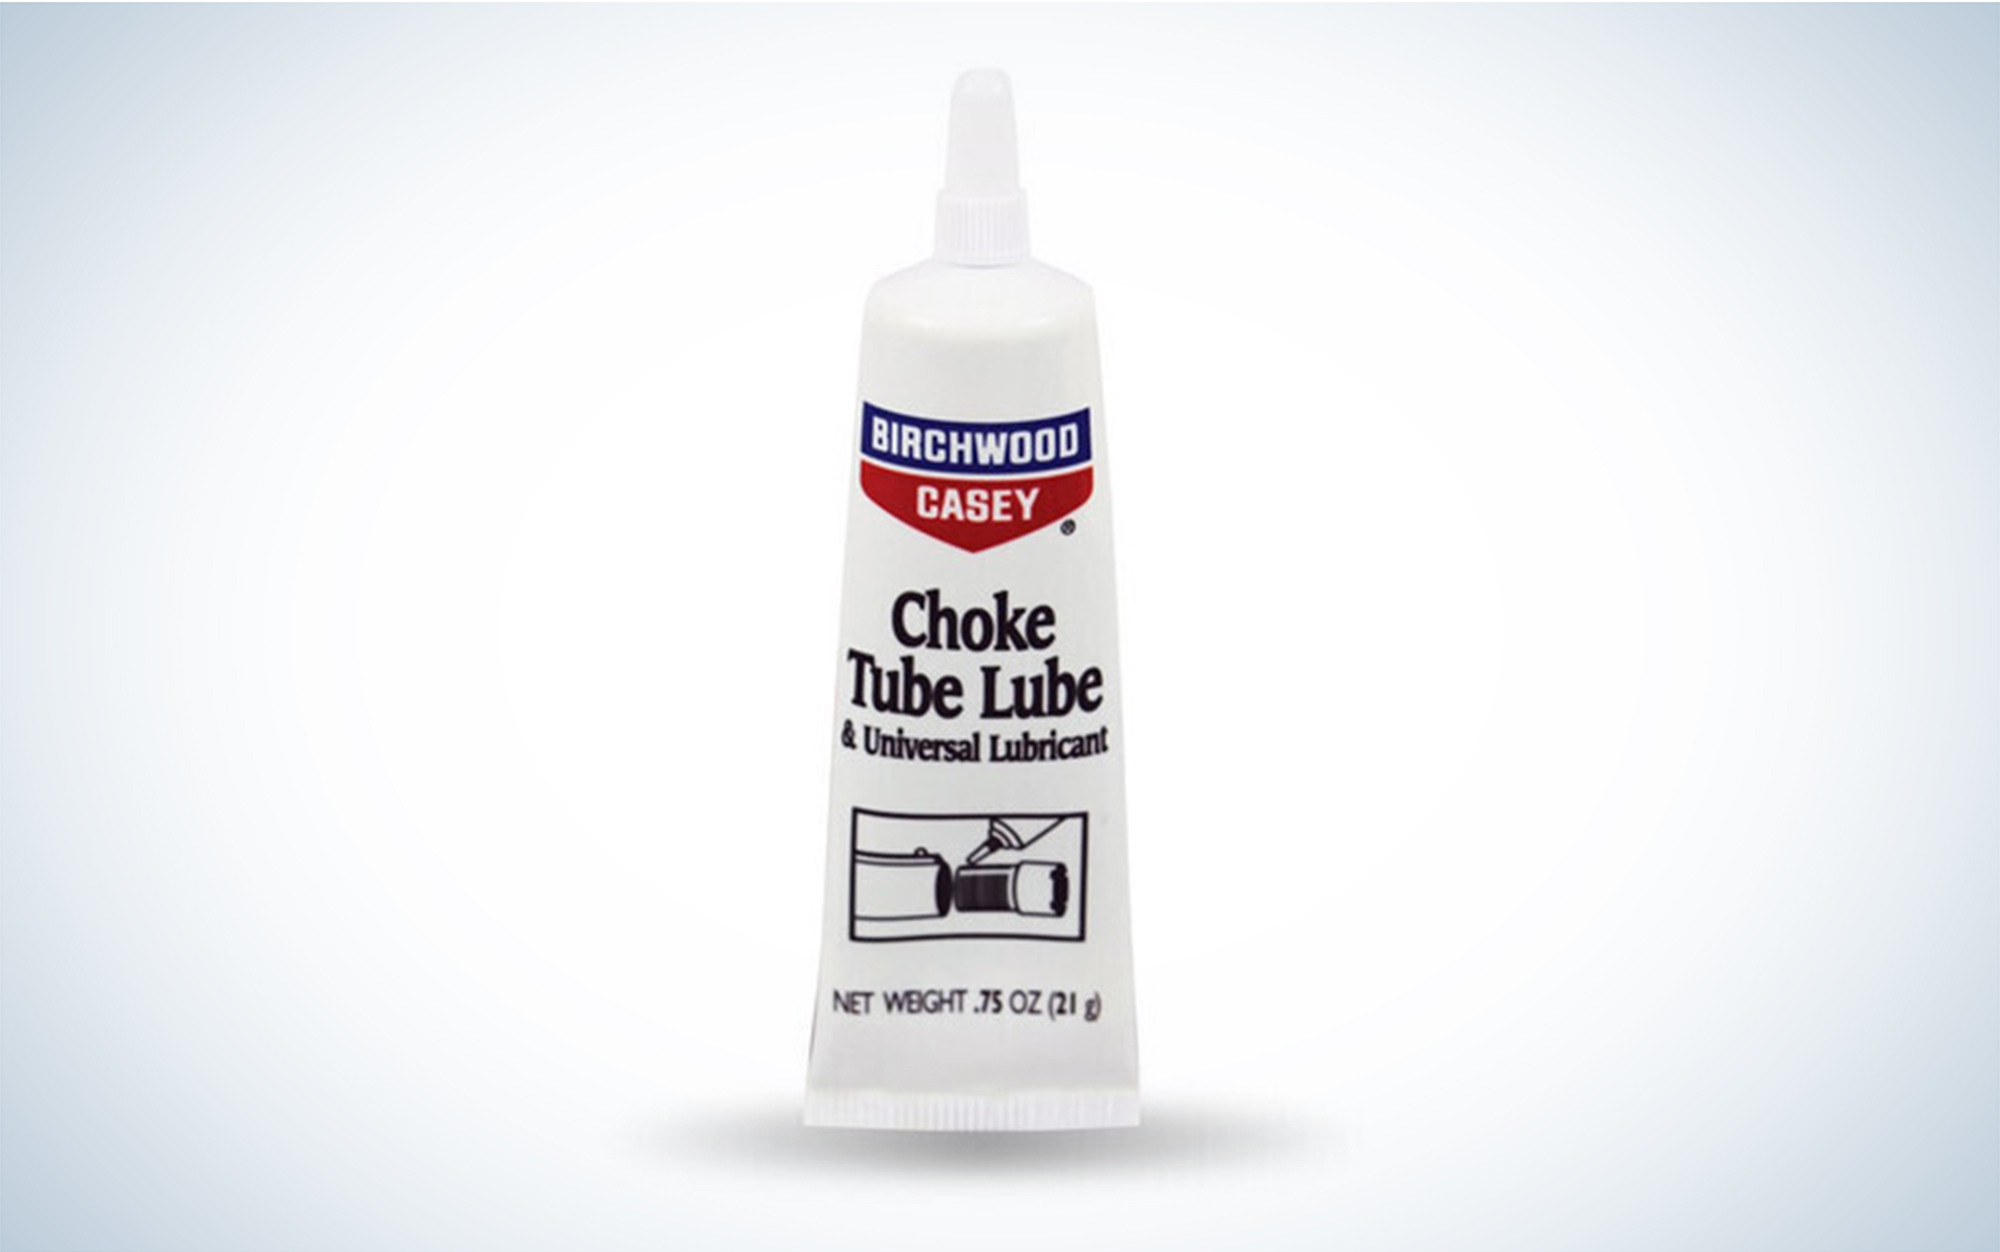 Birchwood Casey makes choke tube lube.